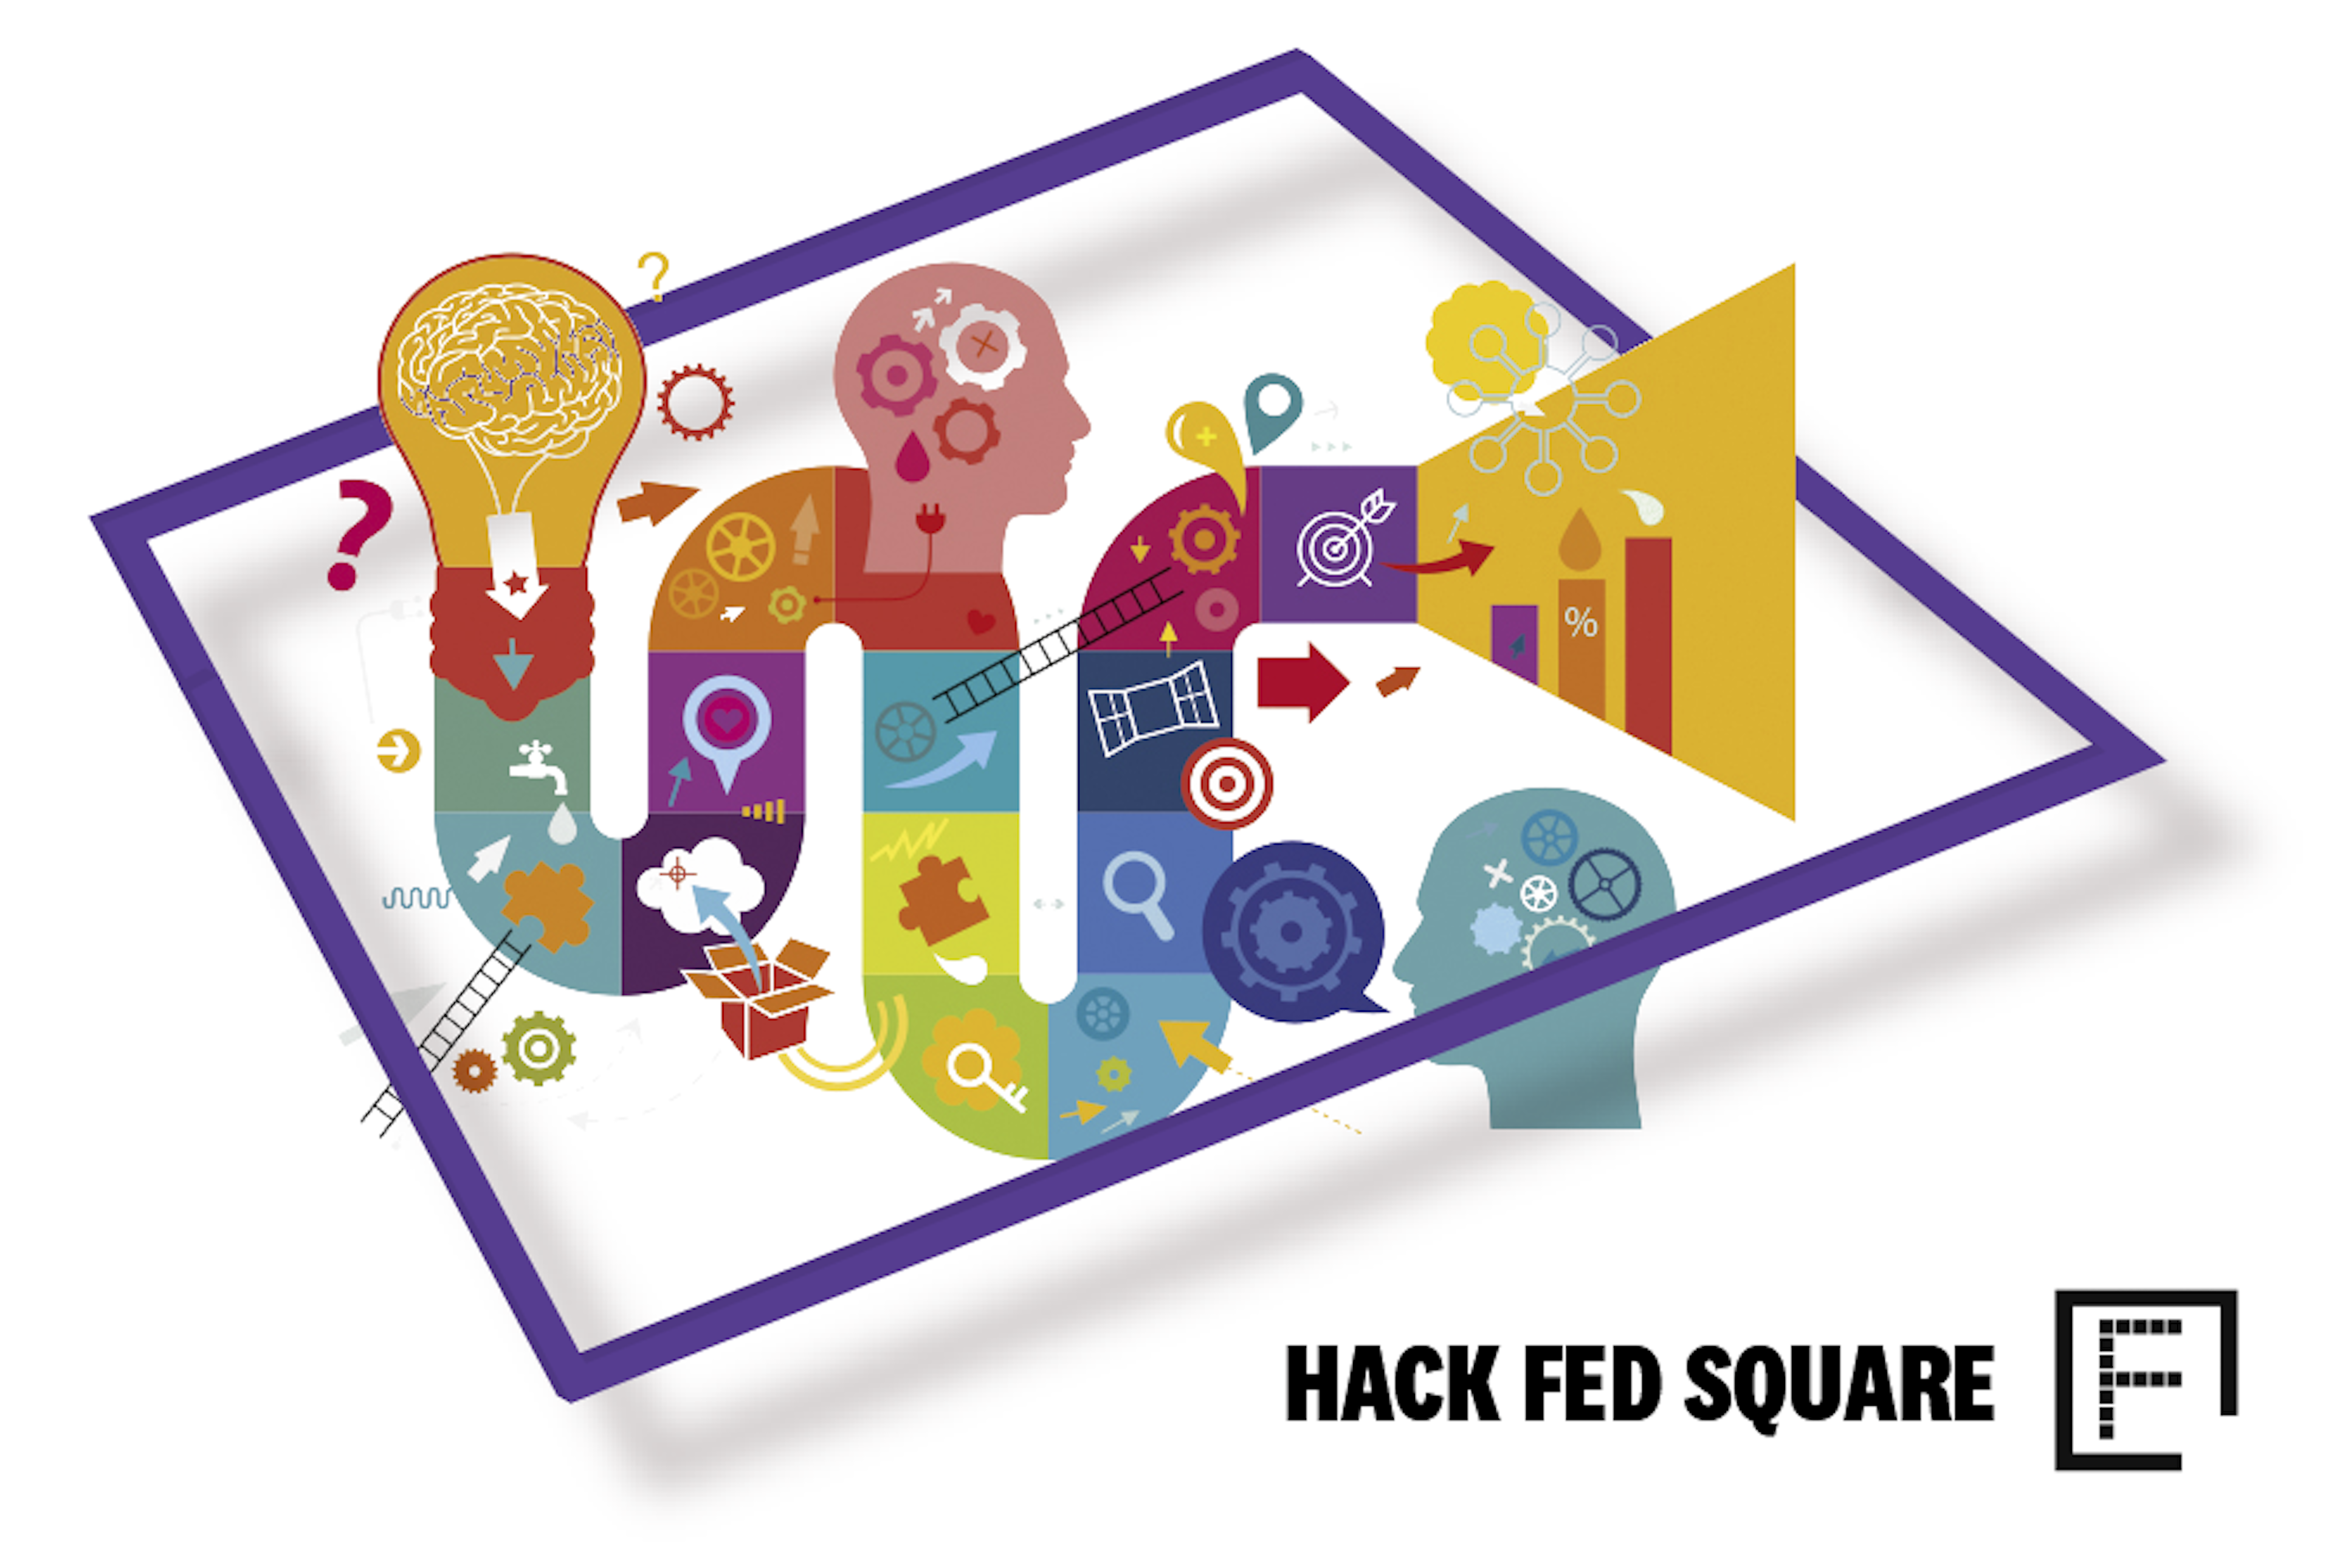 Hack Fed Square 2019